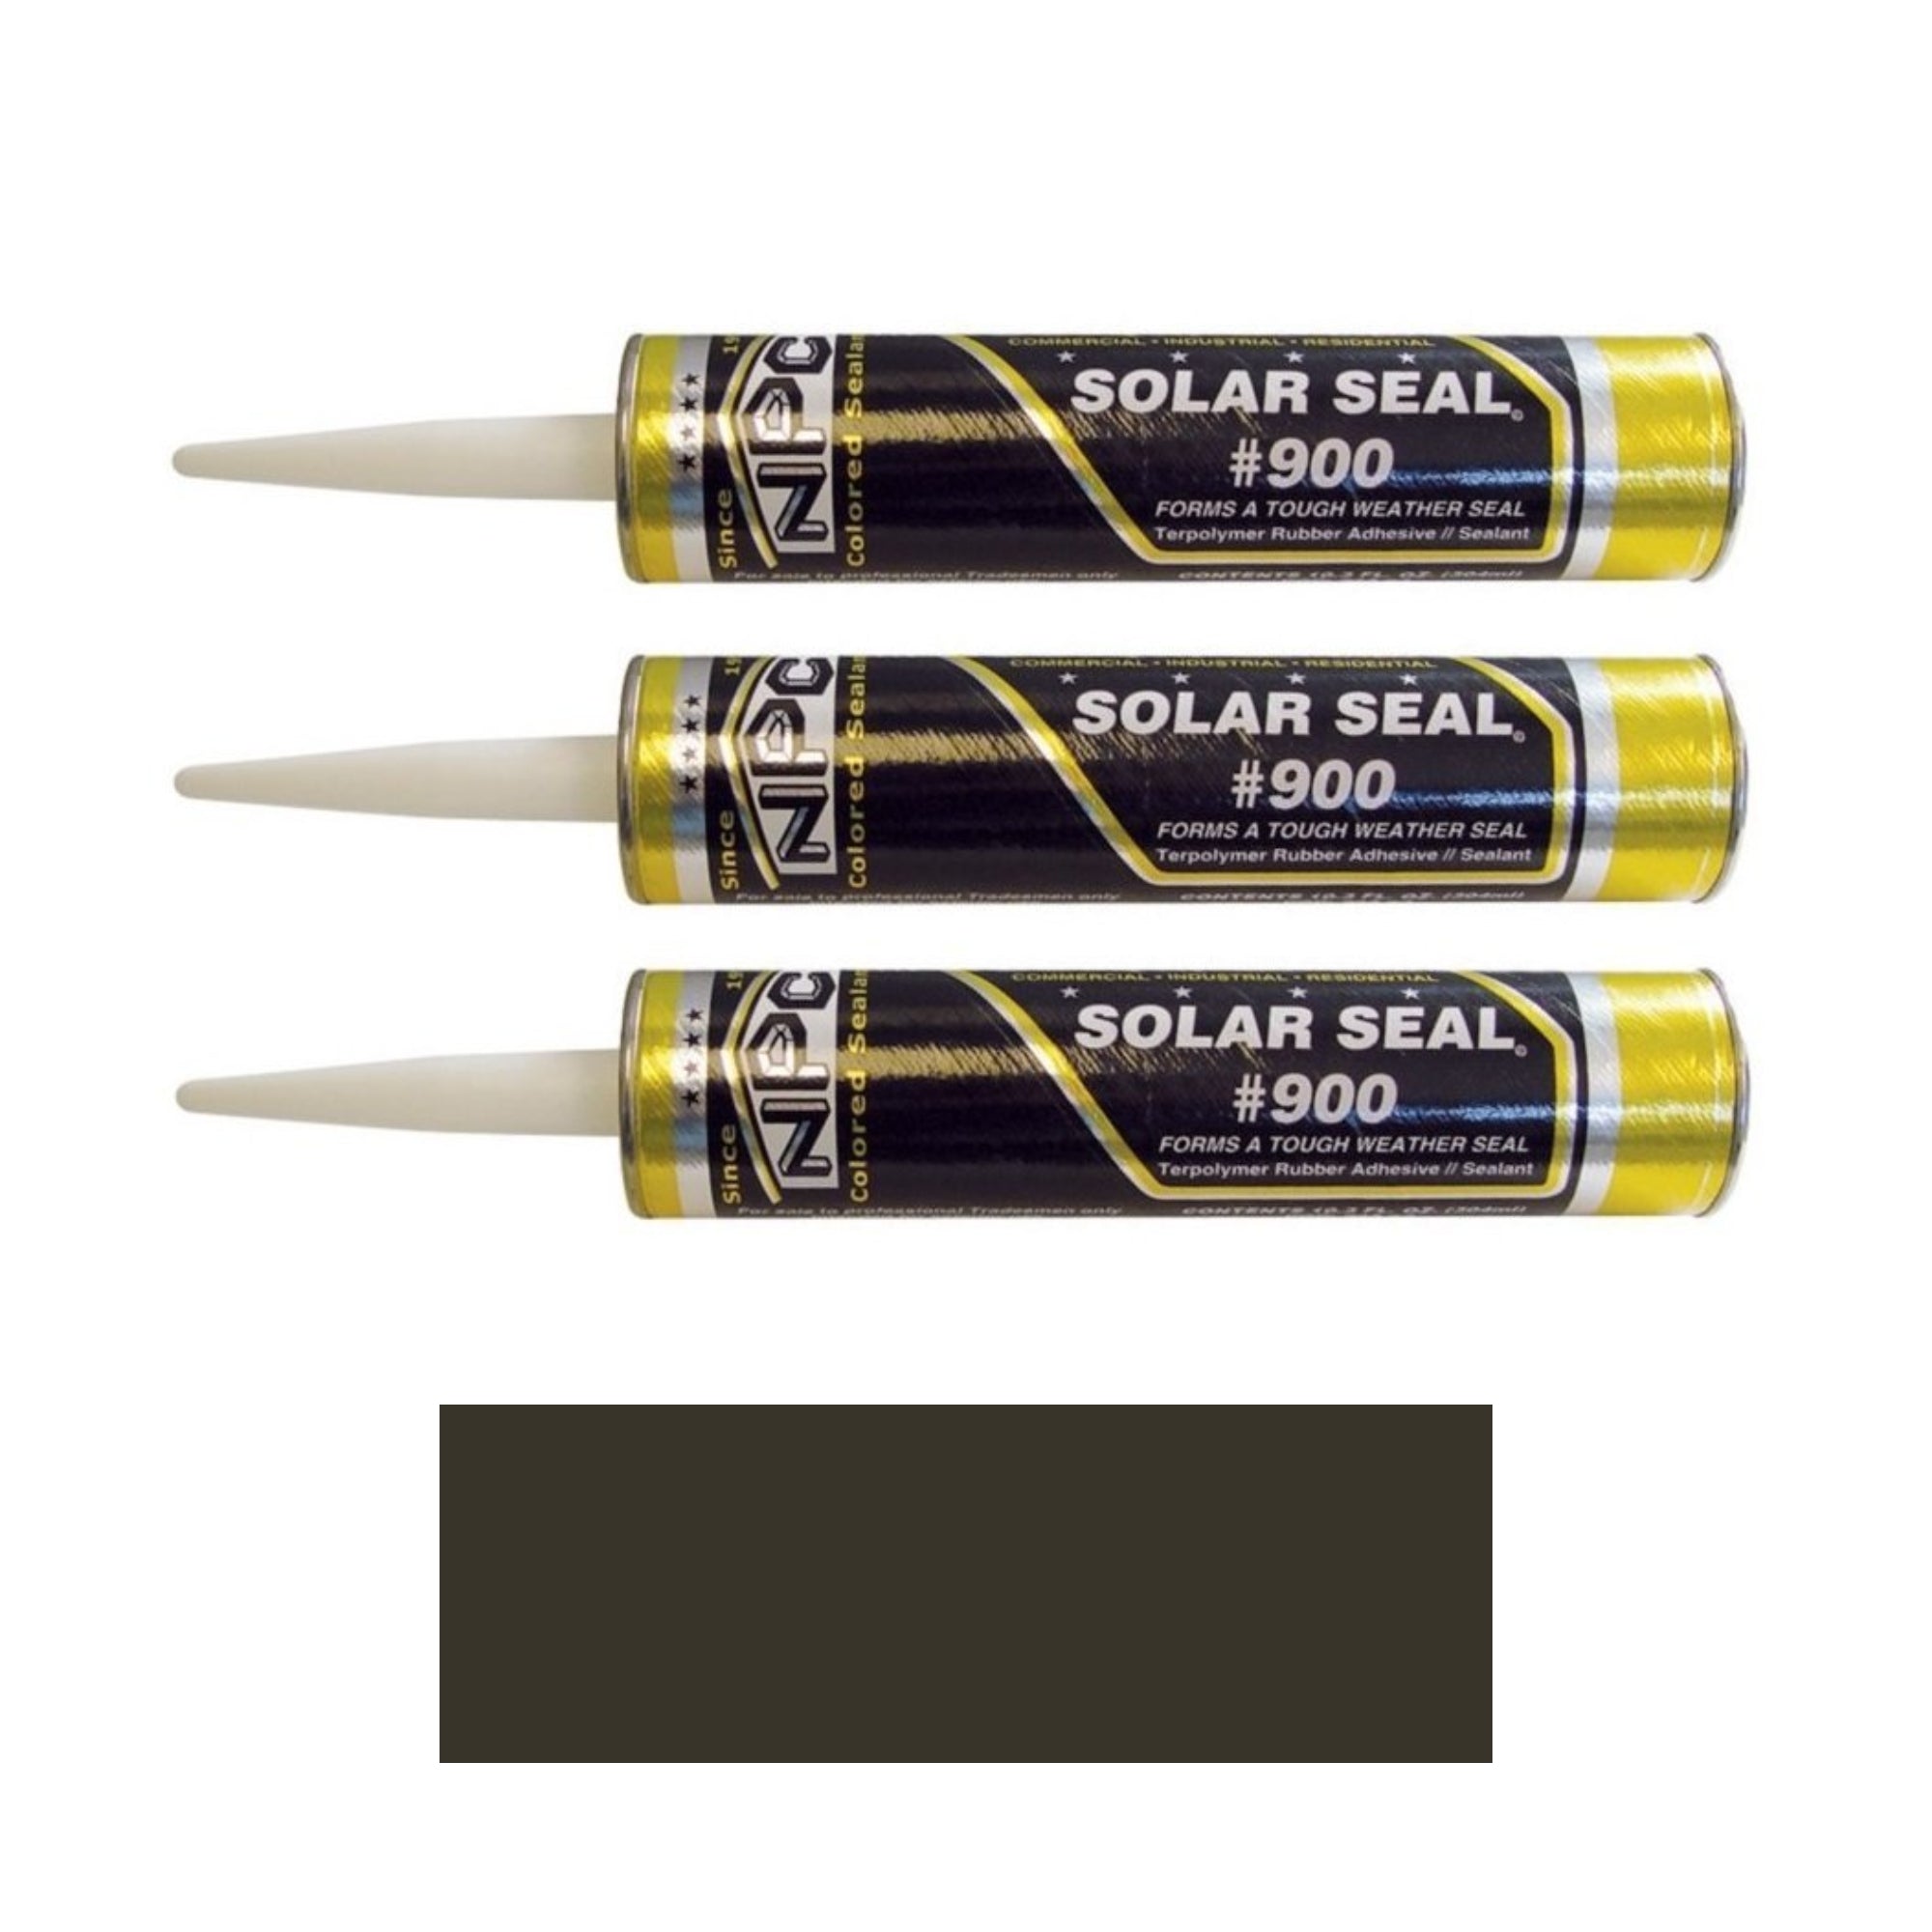 NPC #900 Solar Seal Caulking/Sealant